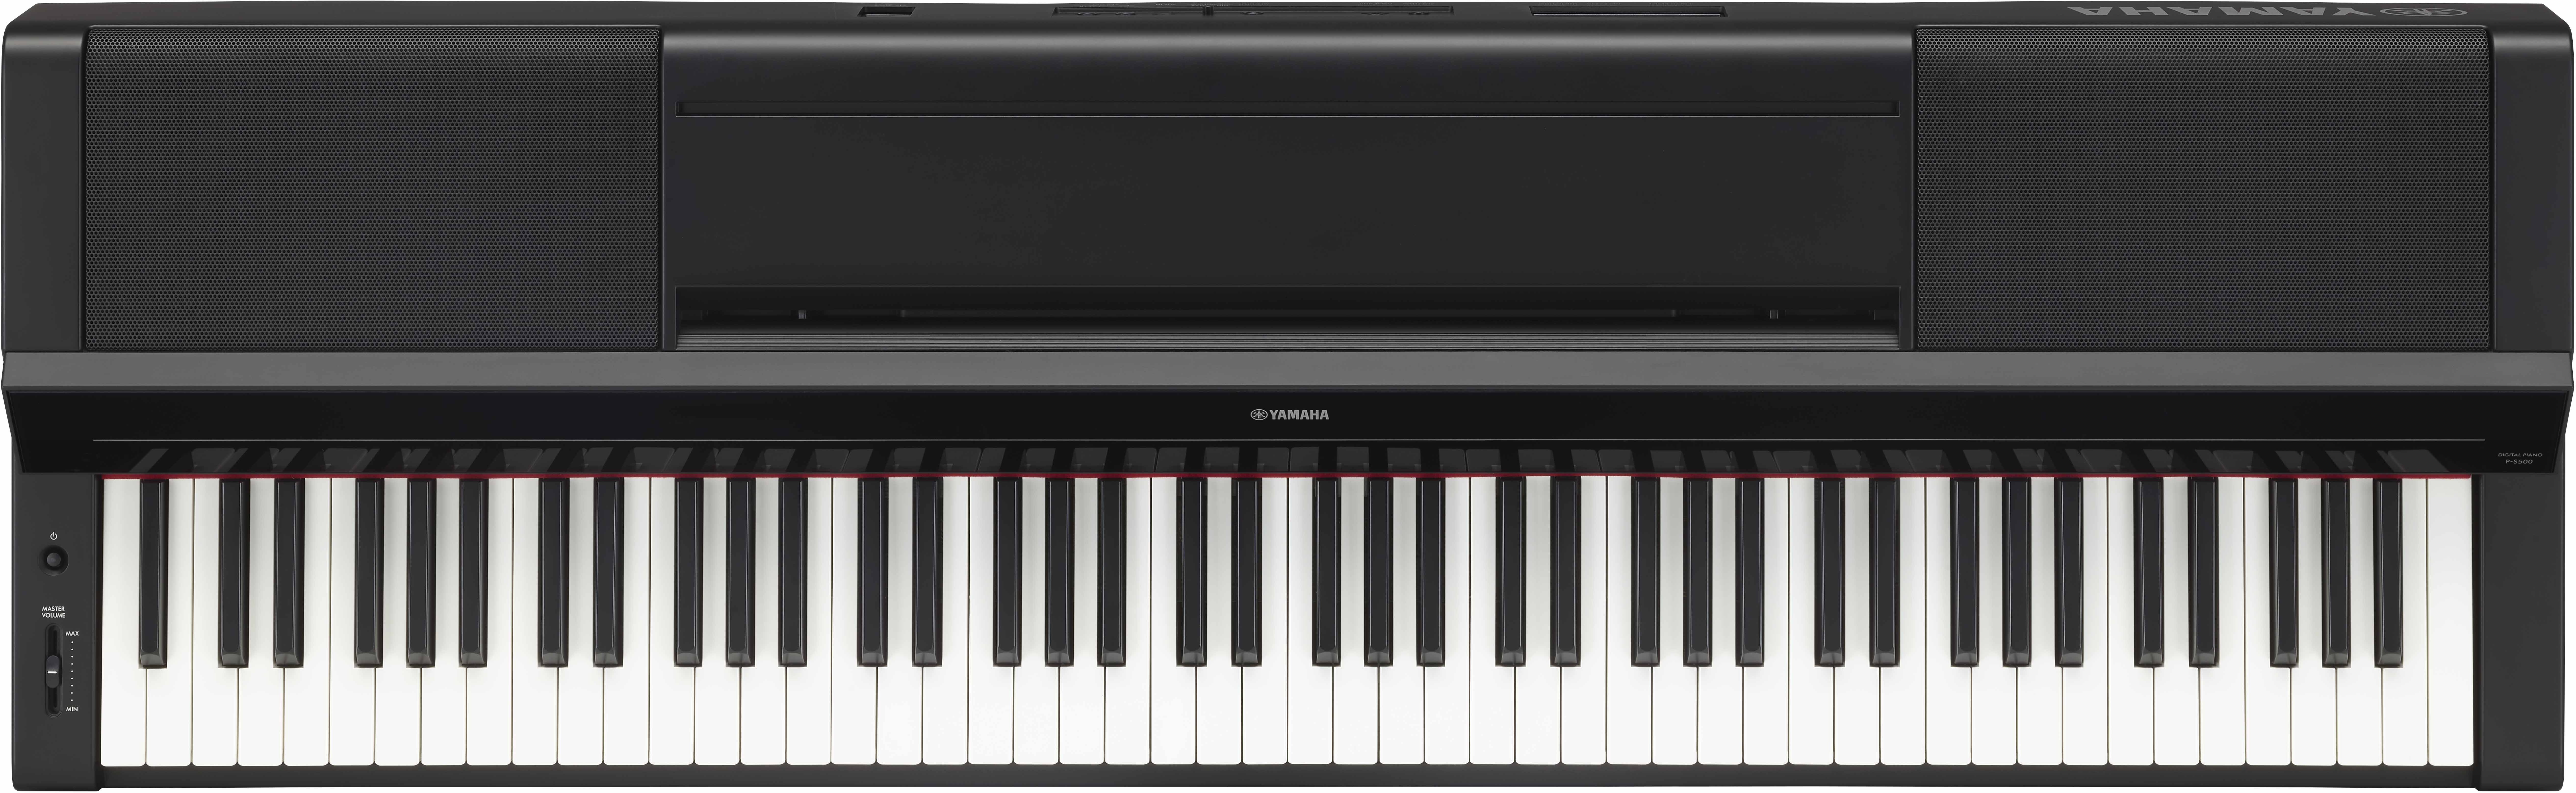 Yamaha PS500 88 Key Digital Piano in Black -  PS500B